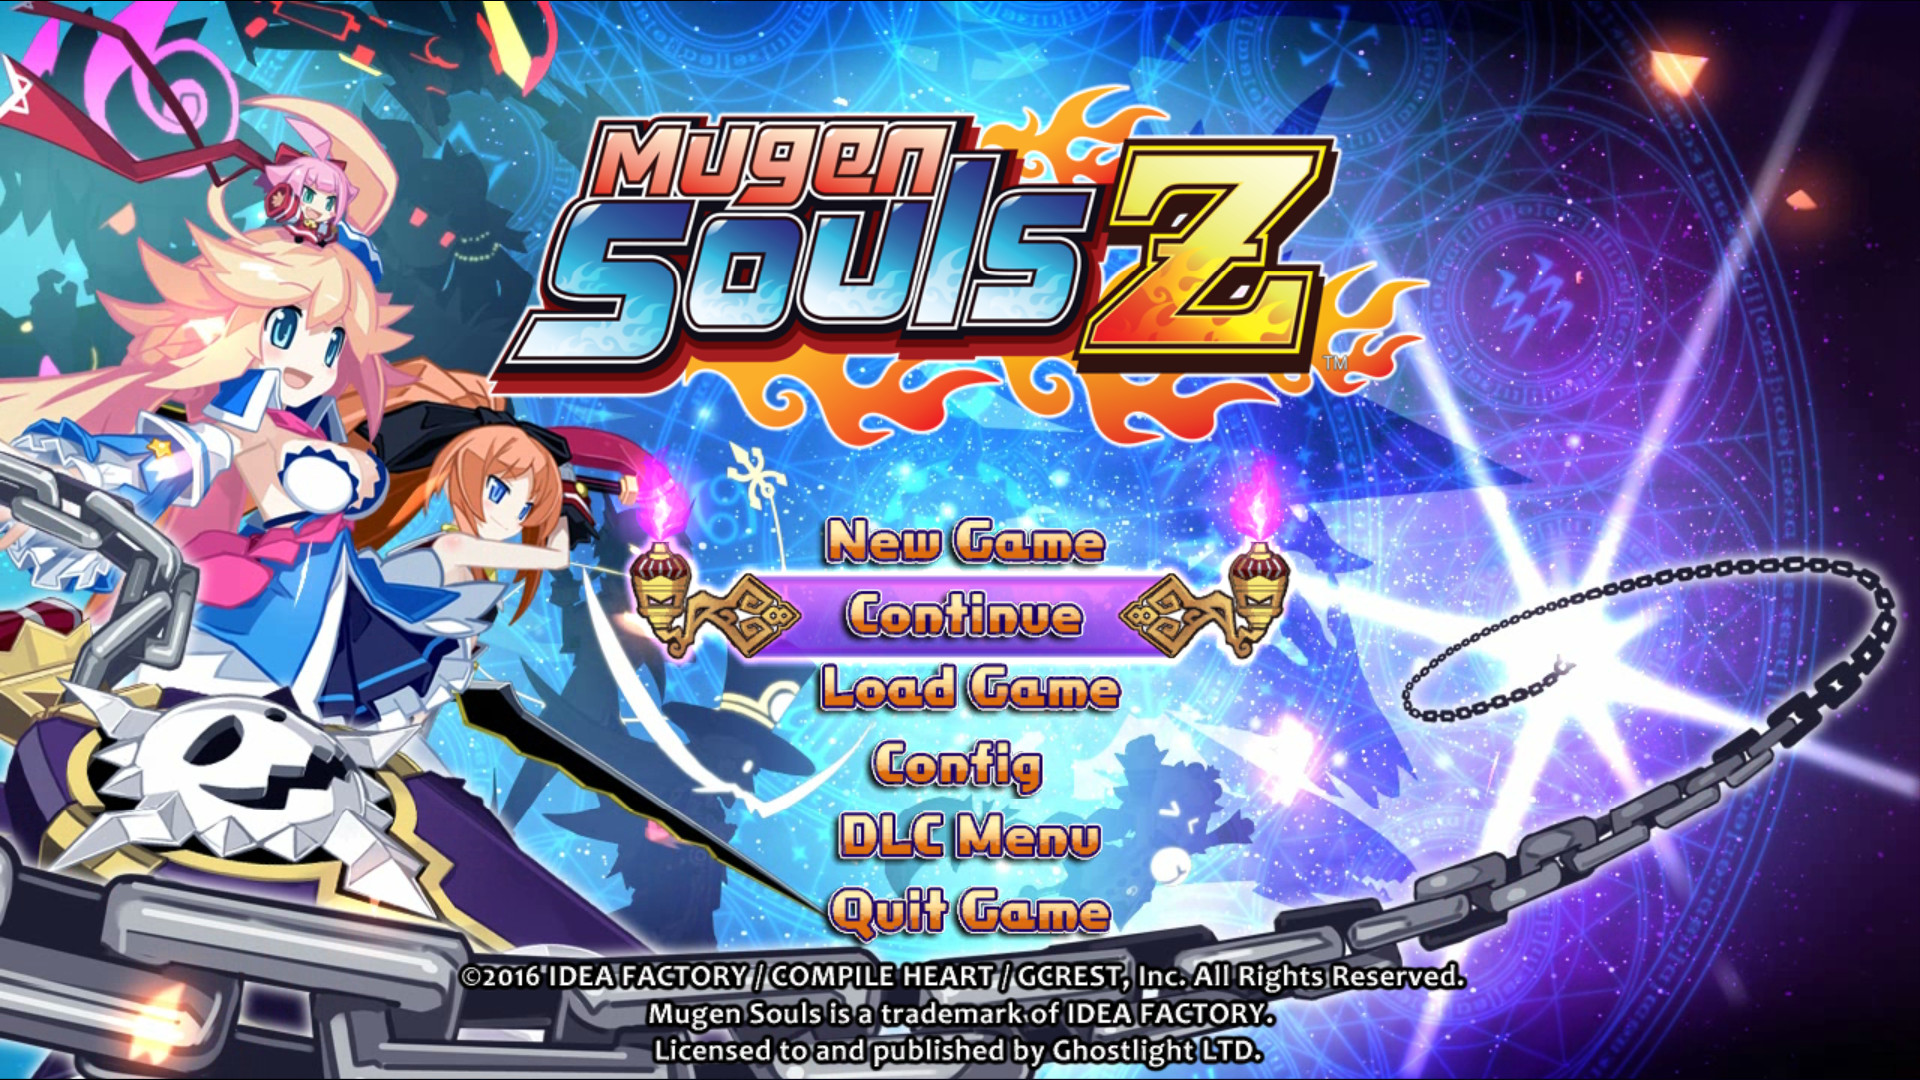 Mugen Souls Z - Ultimate Unlocks Bundle Featured Screenshot #1